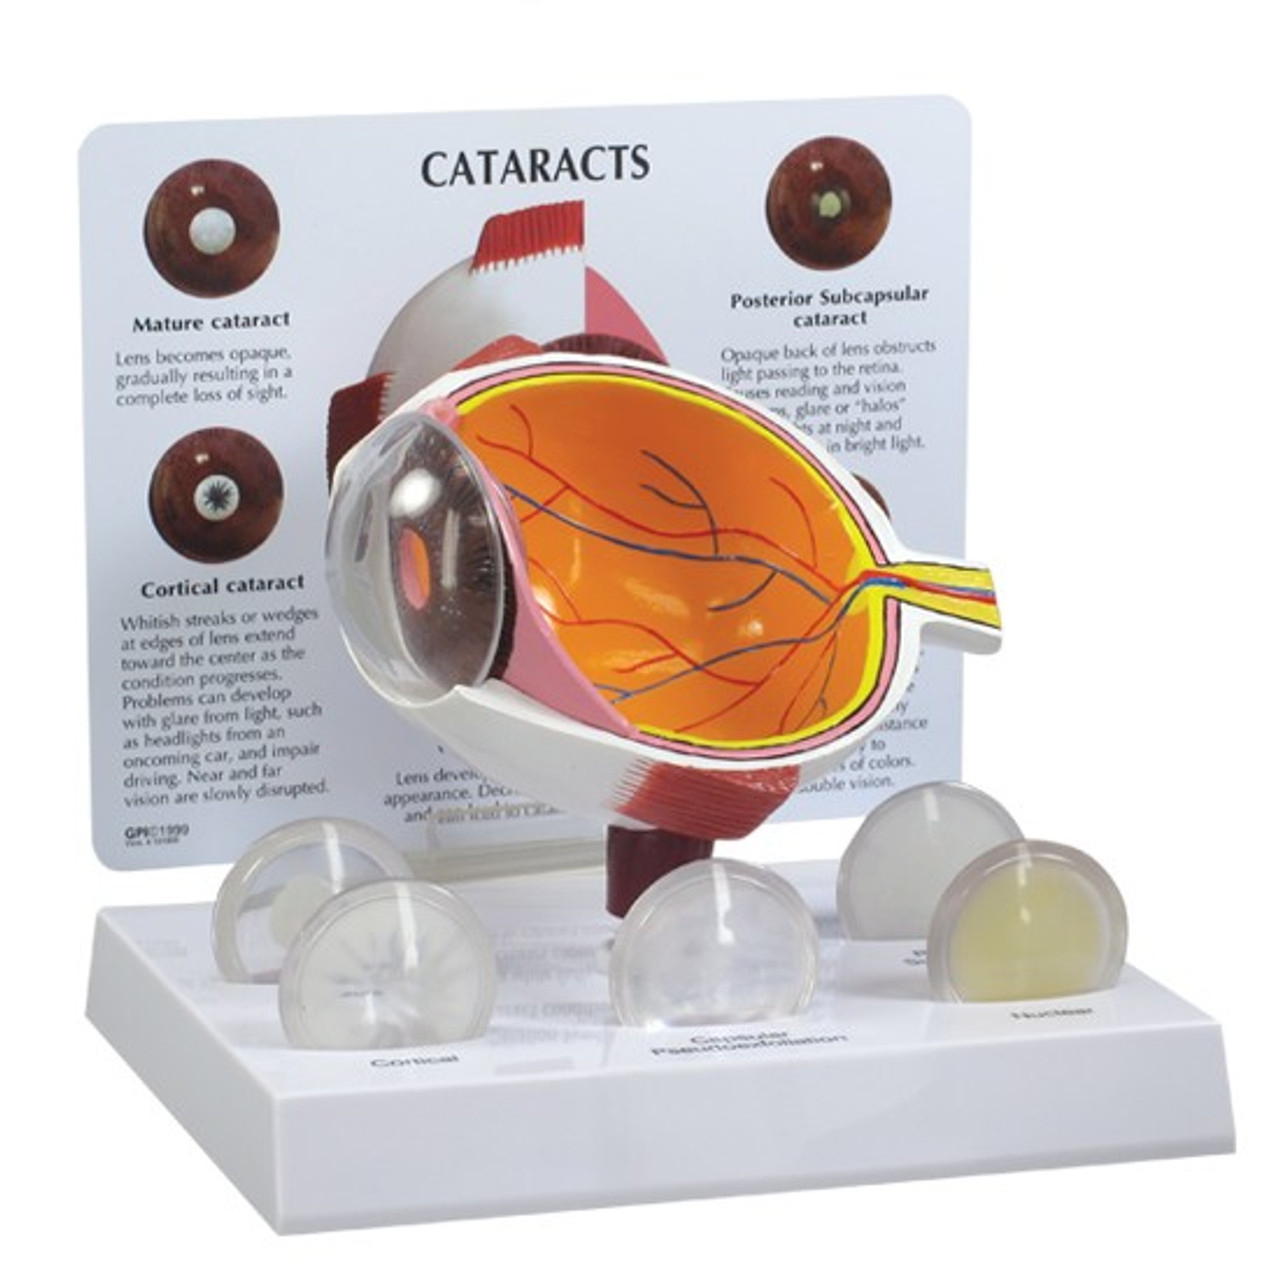 Cataract Eye Model